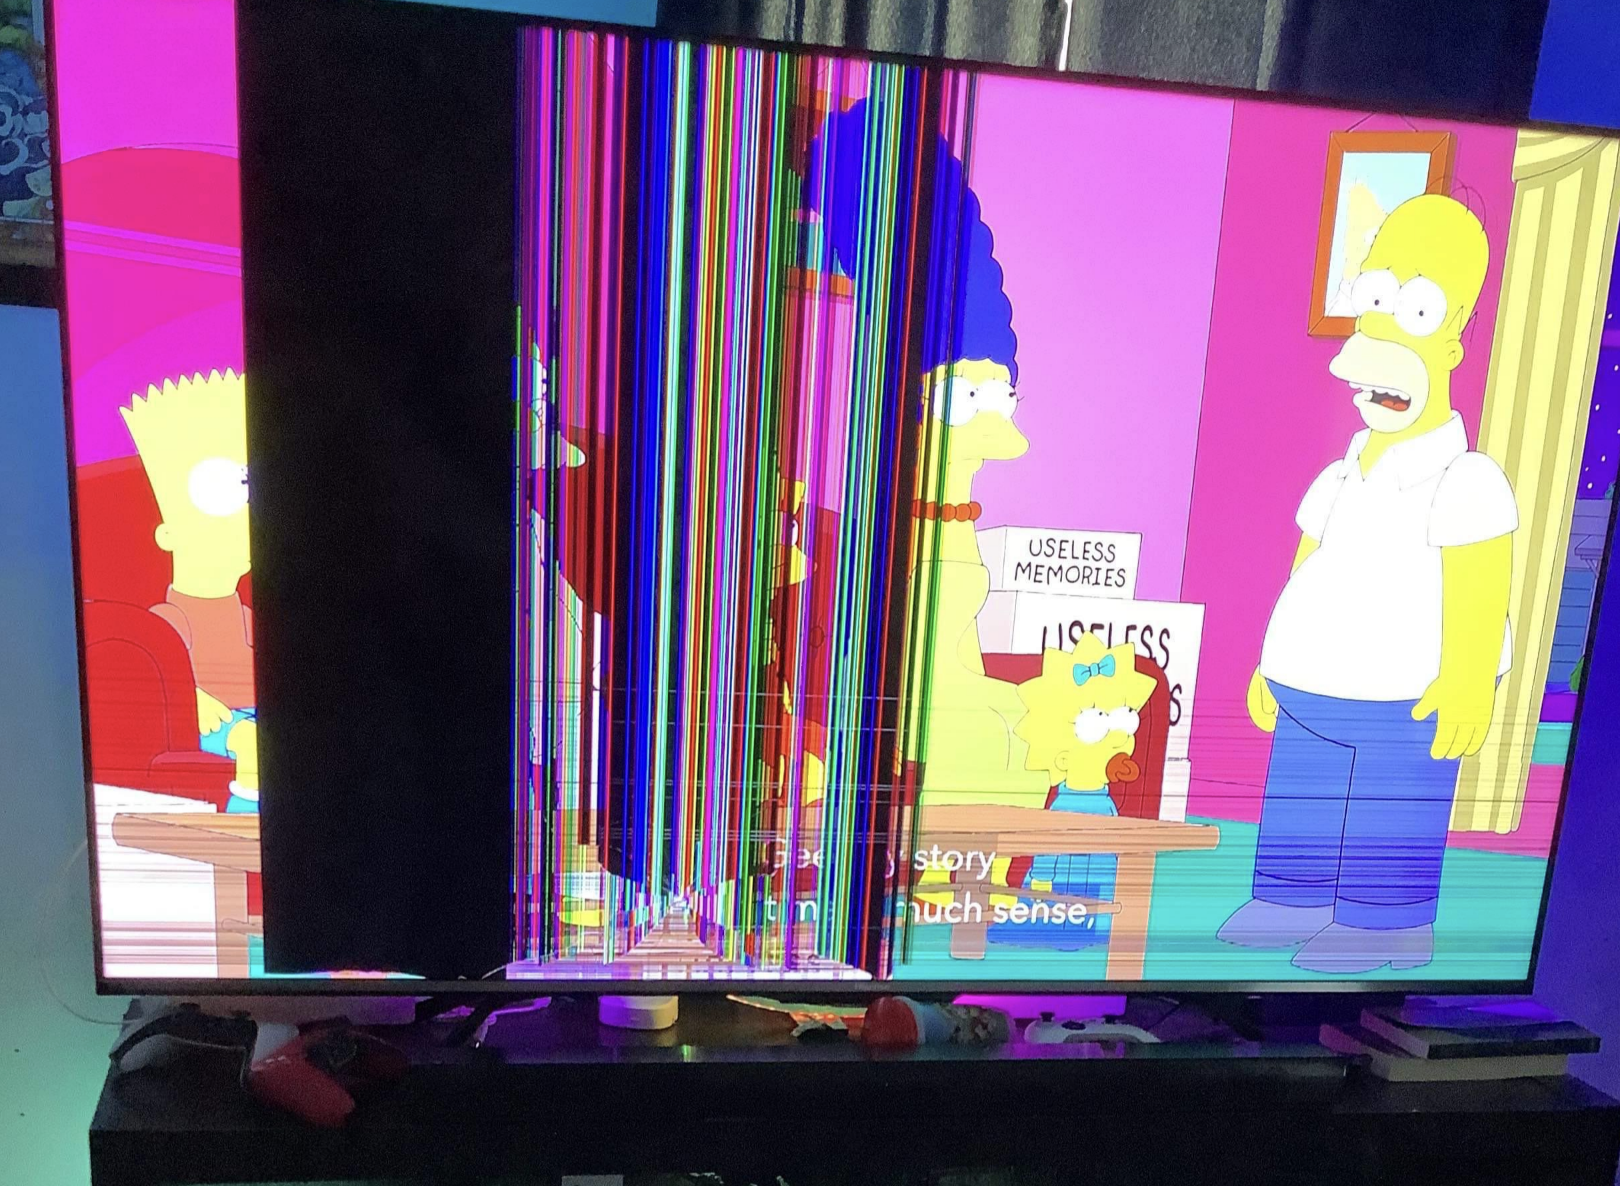 A broken TV